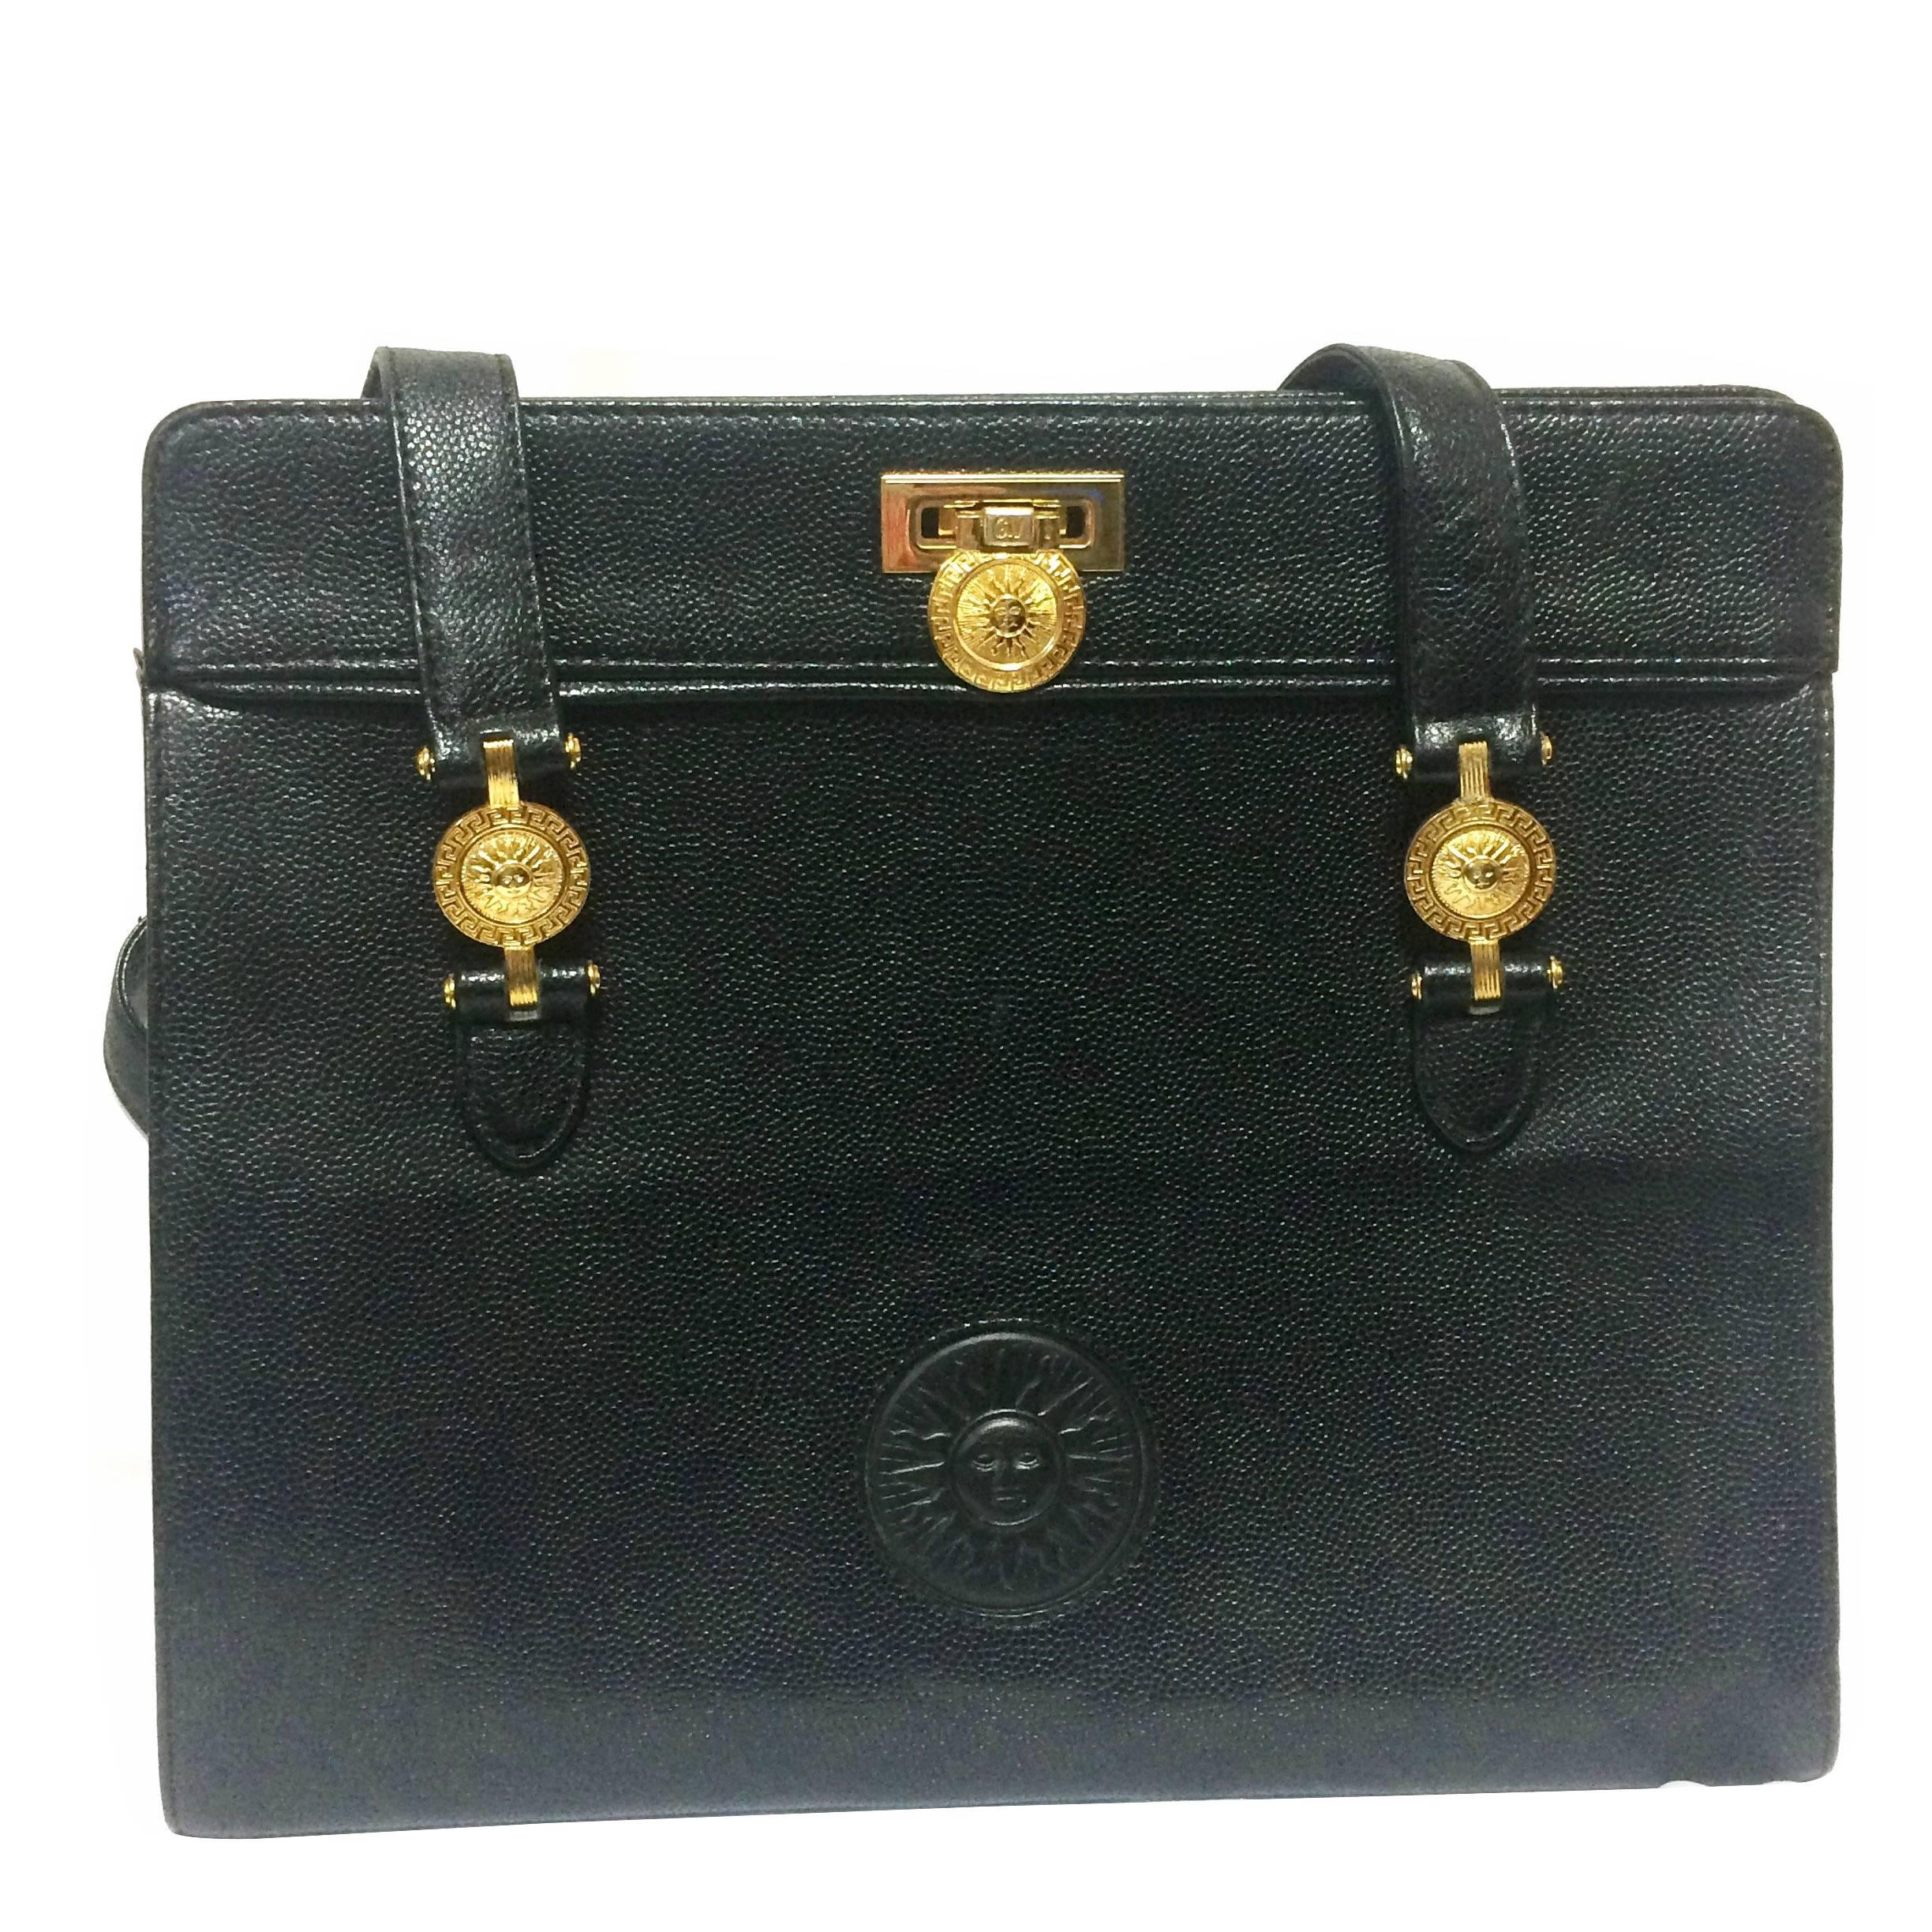 Vintage Gianni Versace black leather tote bag with golden sunburst motifs. For Sale